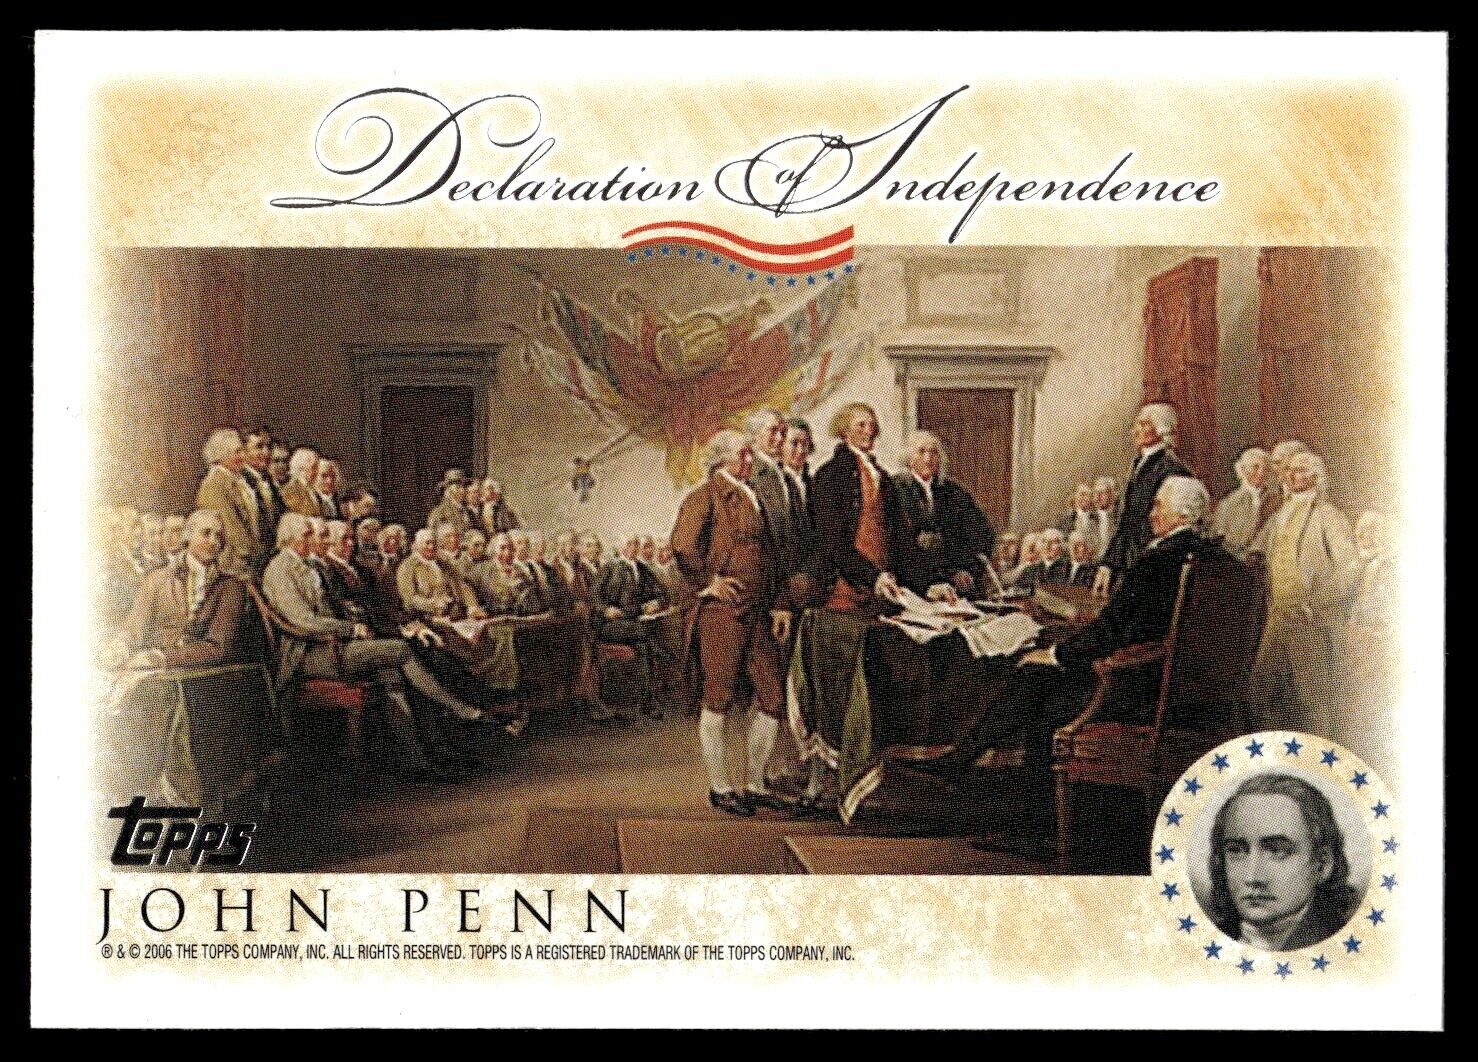 2006 Topps Card #JP Declaration of Independence John Penn